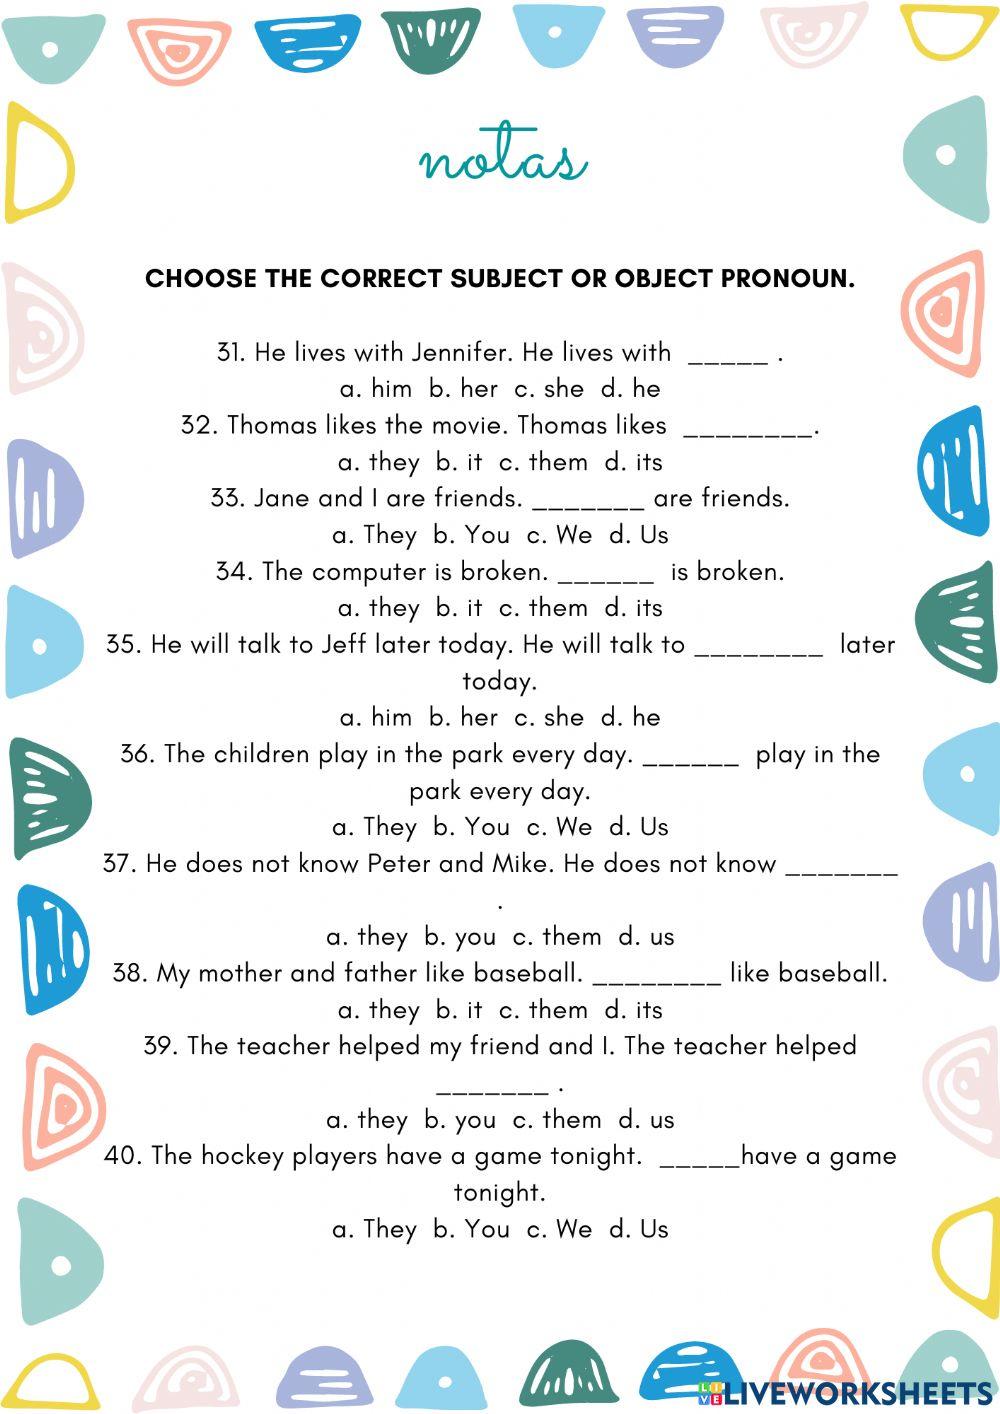 Subjec or object pronouns?